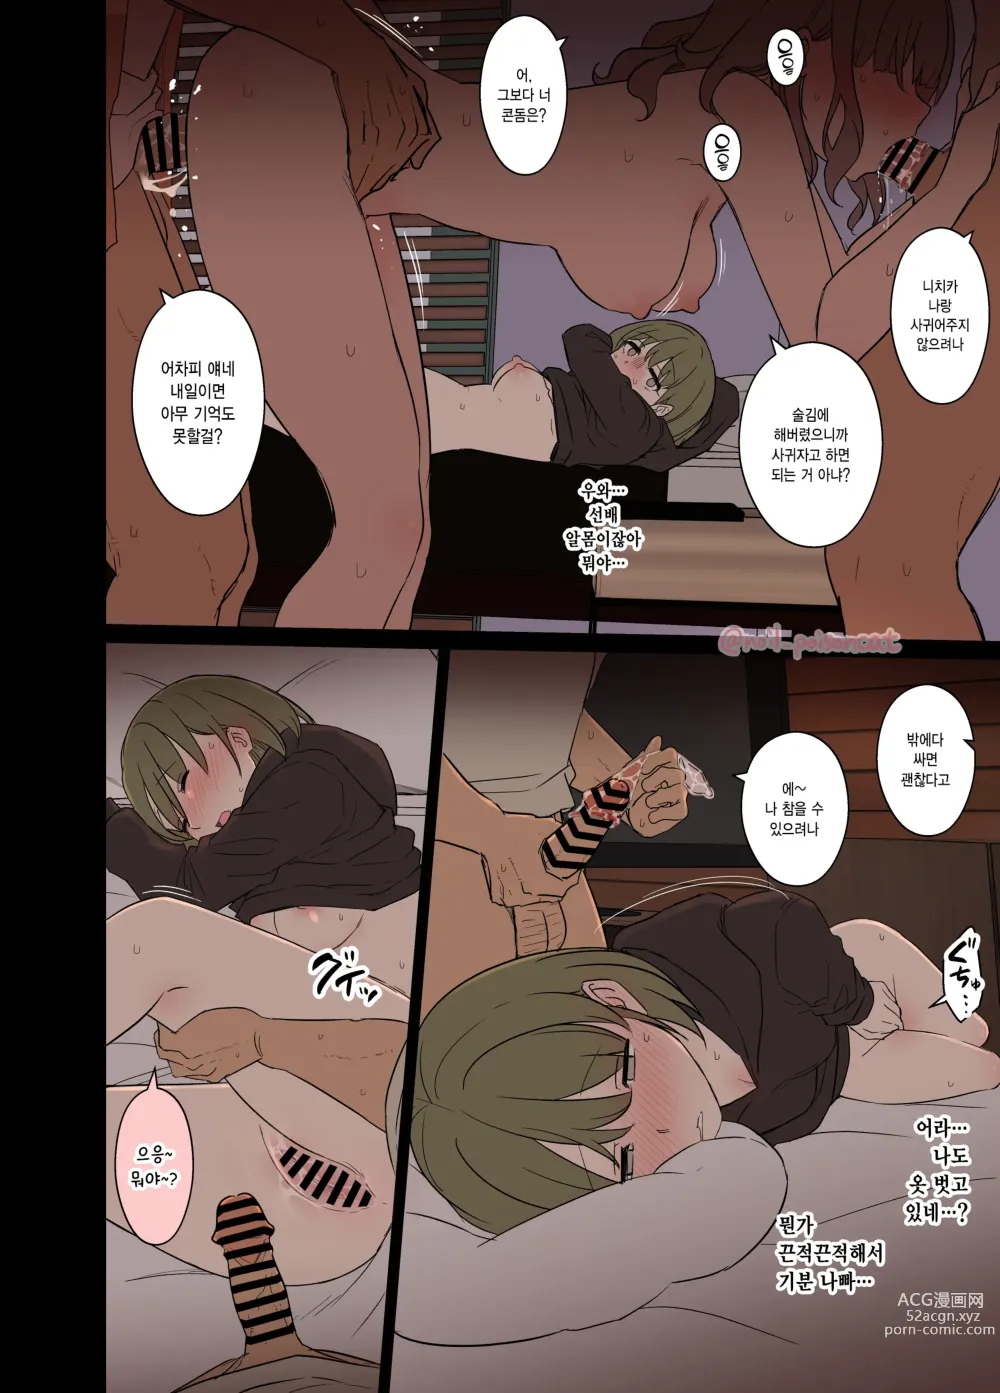 Page 9 of doujinshi 만취한 나나쿠사 니치카에게 나쁜 짓을 하는 이야기